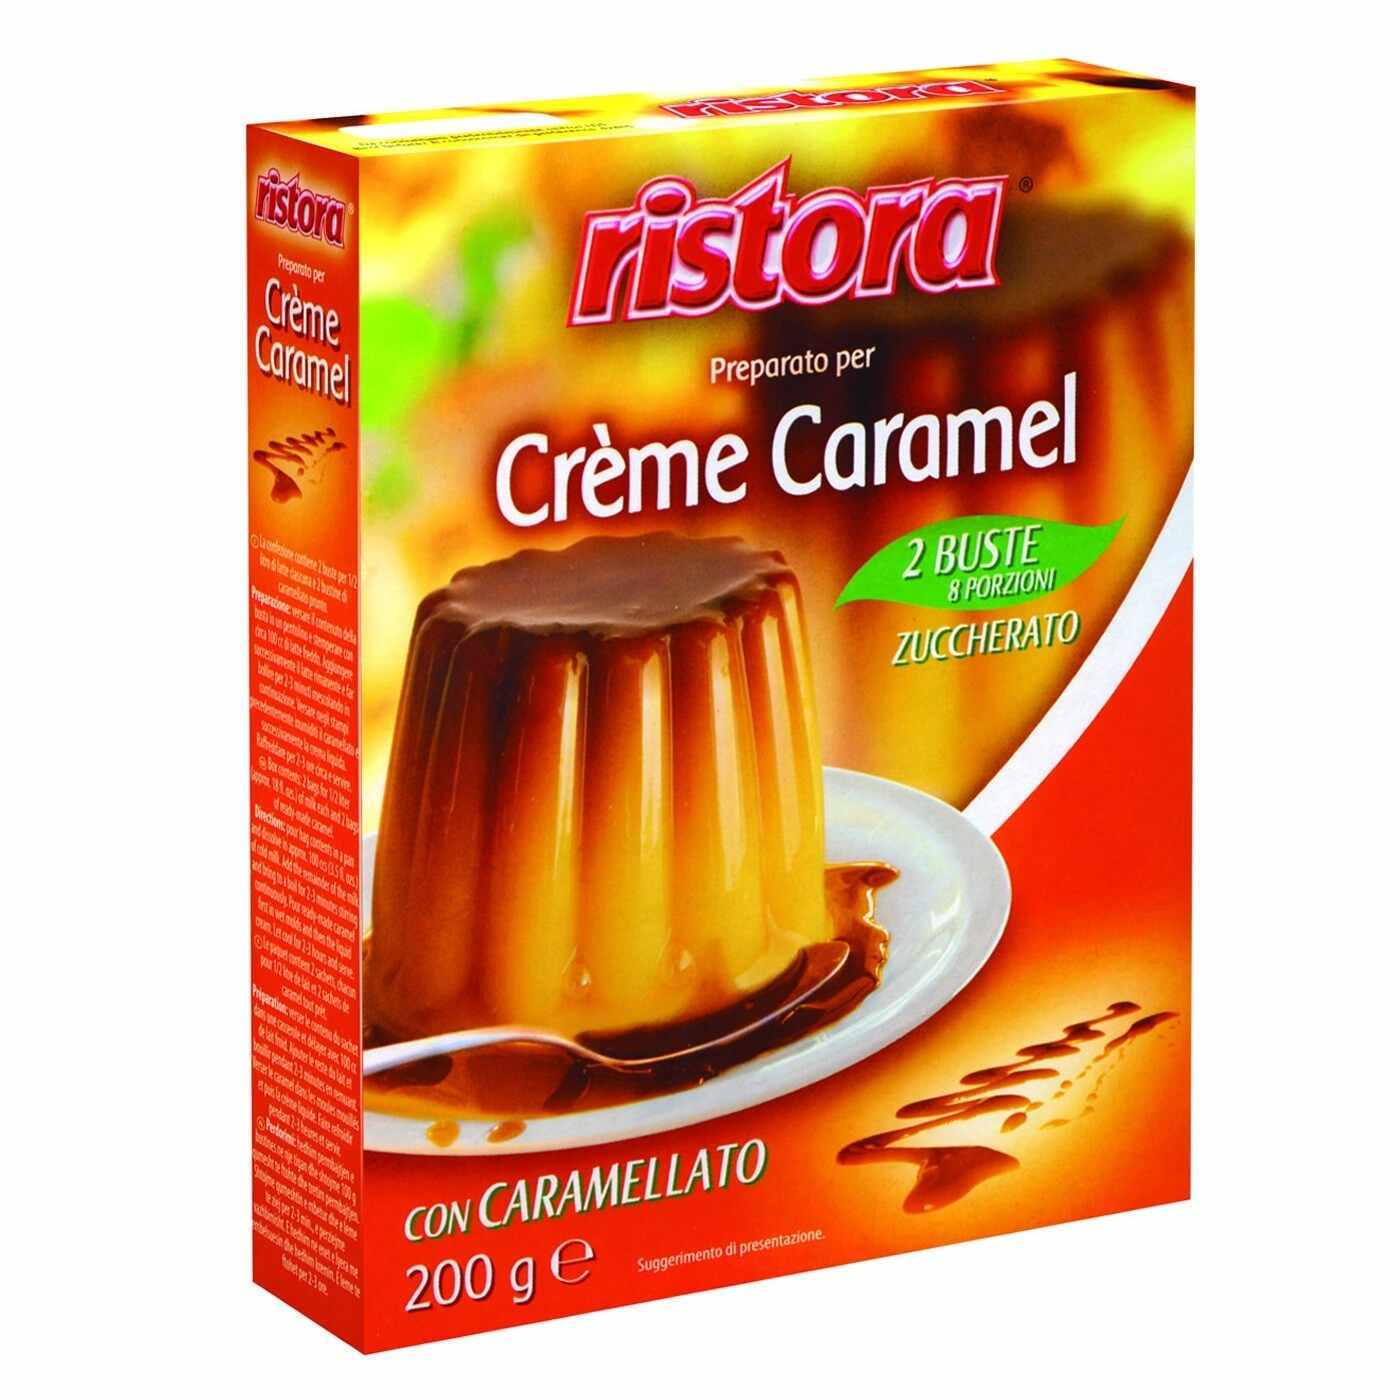 Ristora Creme Caramel budinca 200g